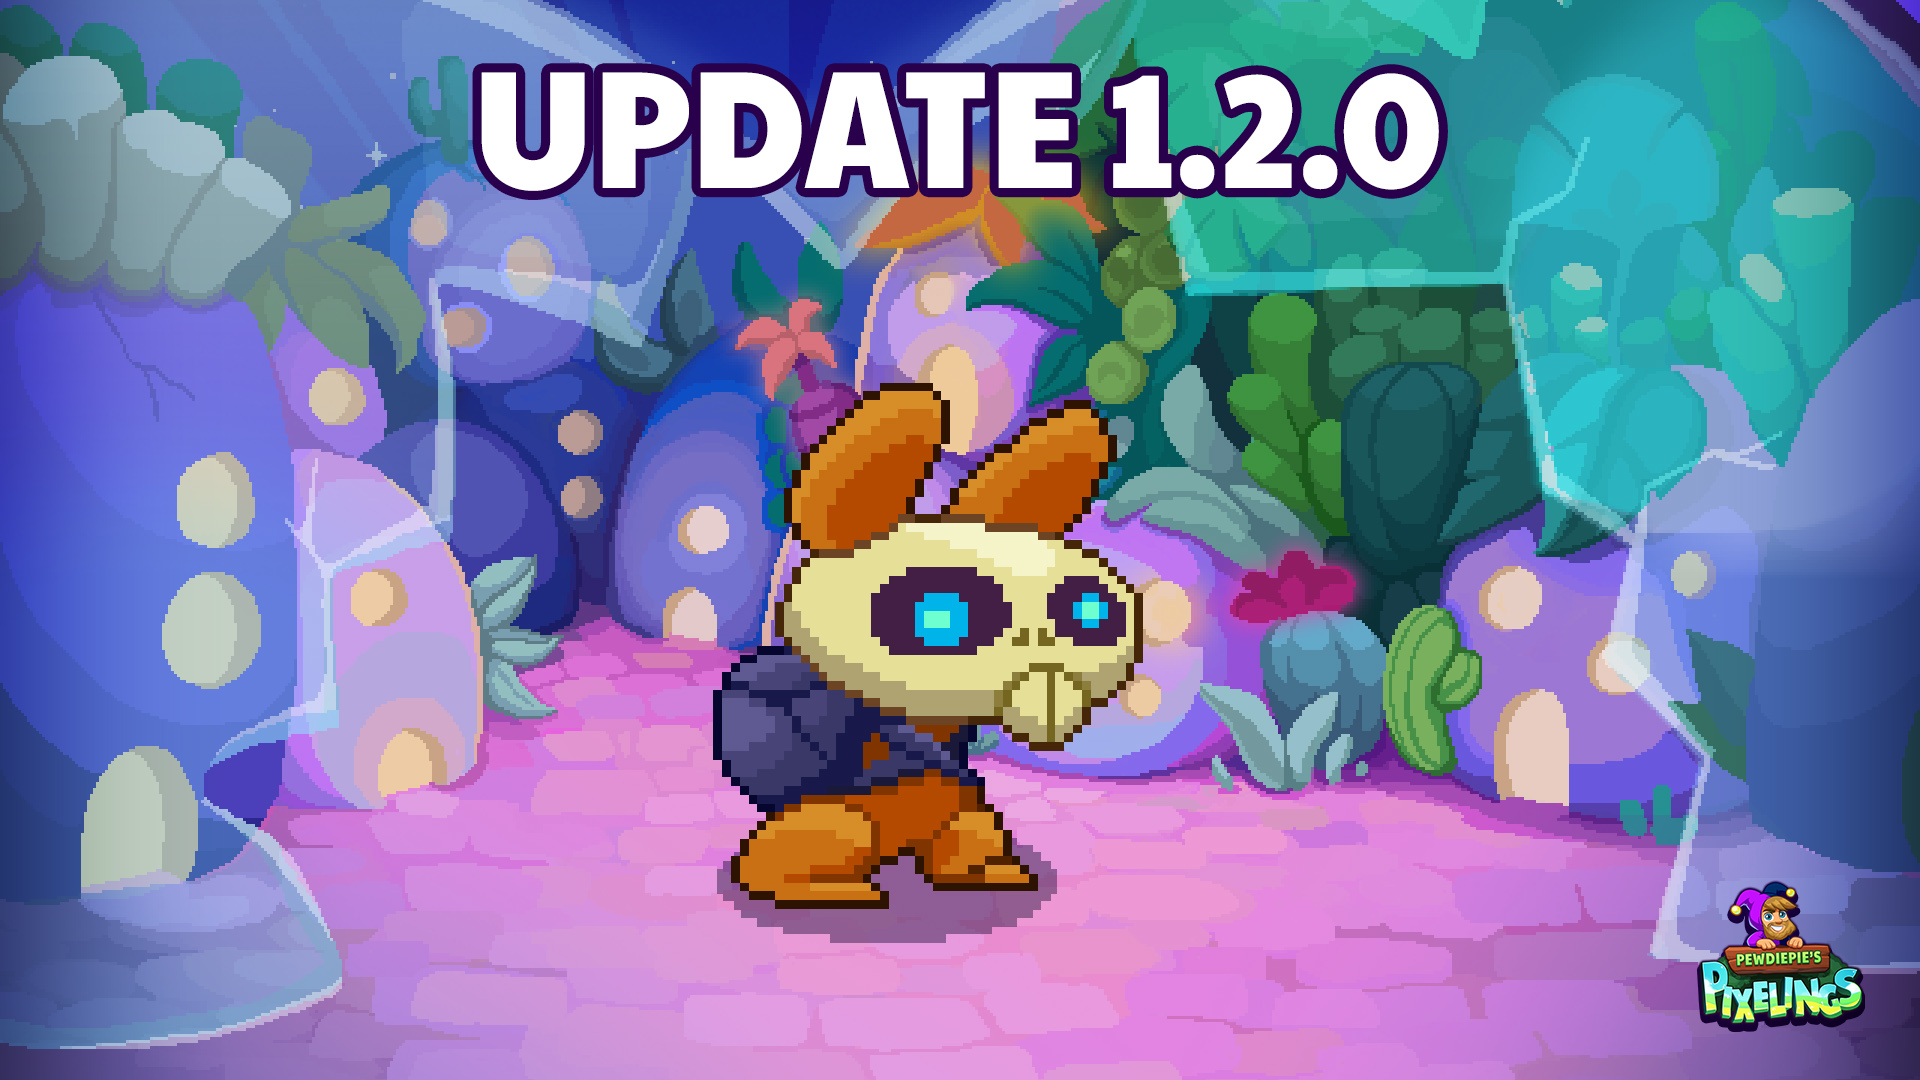 Pixelings Update 1.2.0